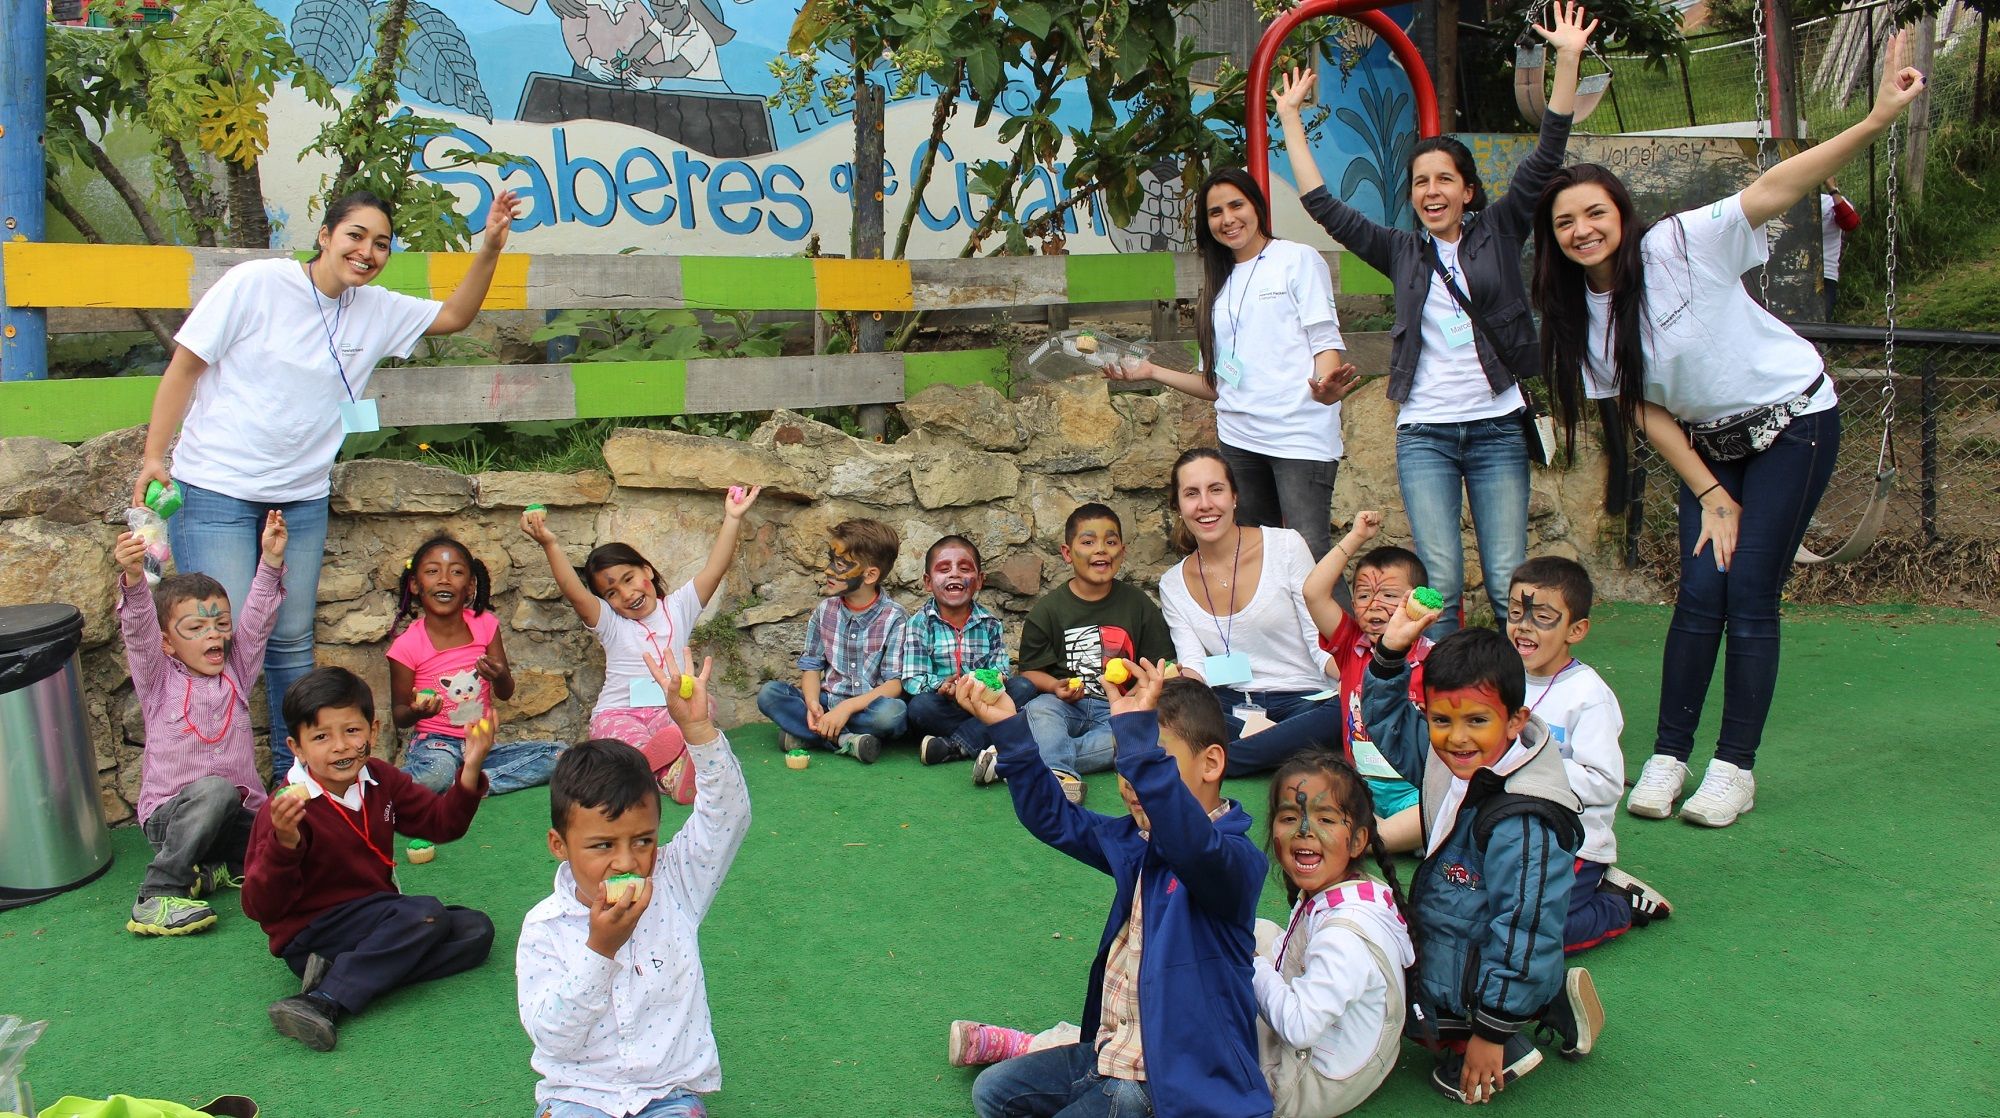 HPE Volunteering activity in Colombia.